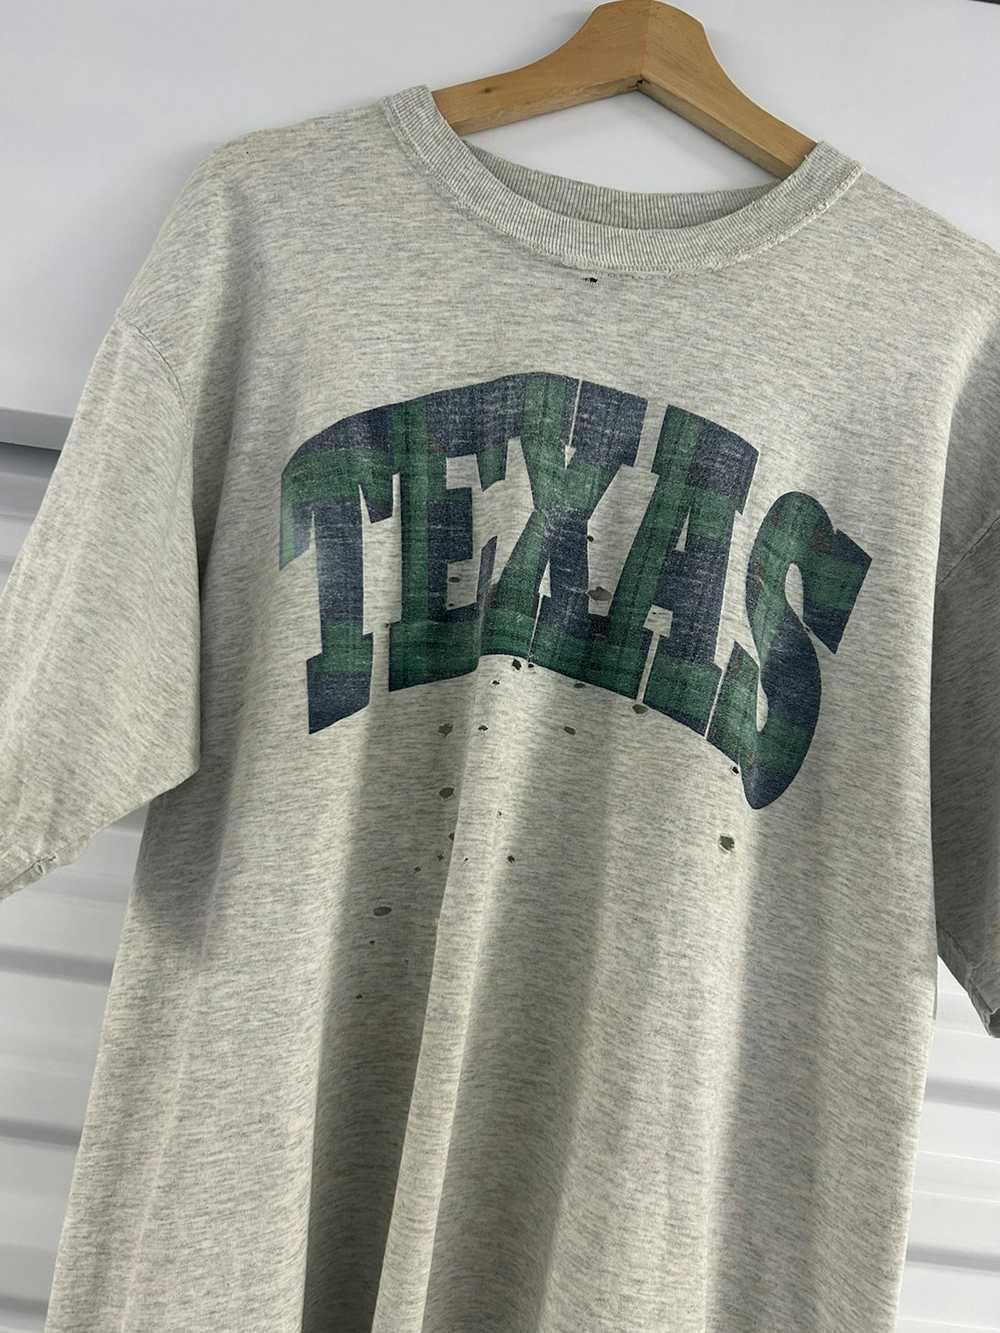 Vintage VTG Texas Shirt Distressed 90s - image 2